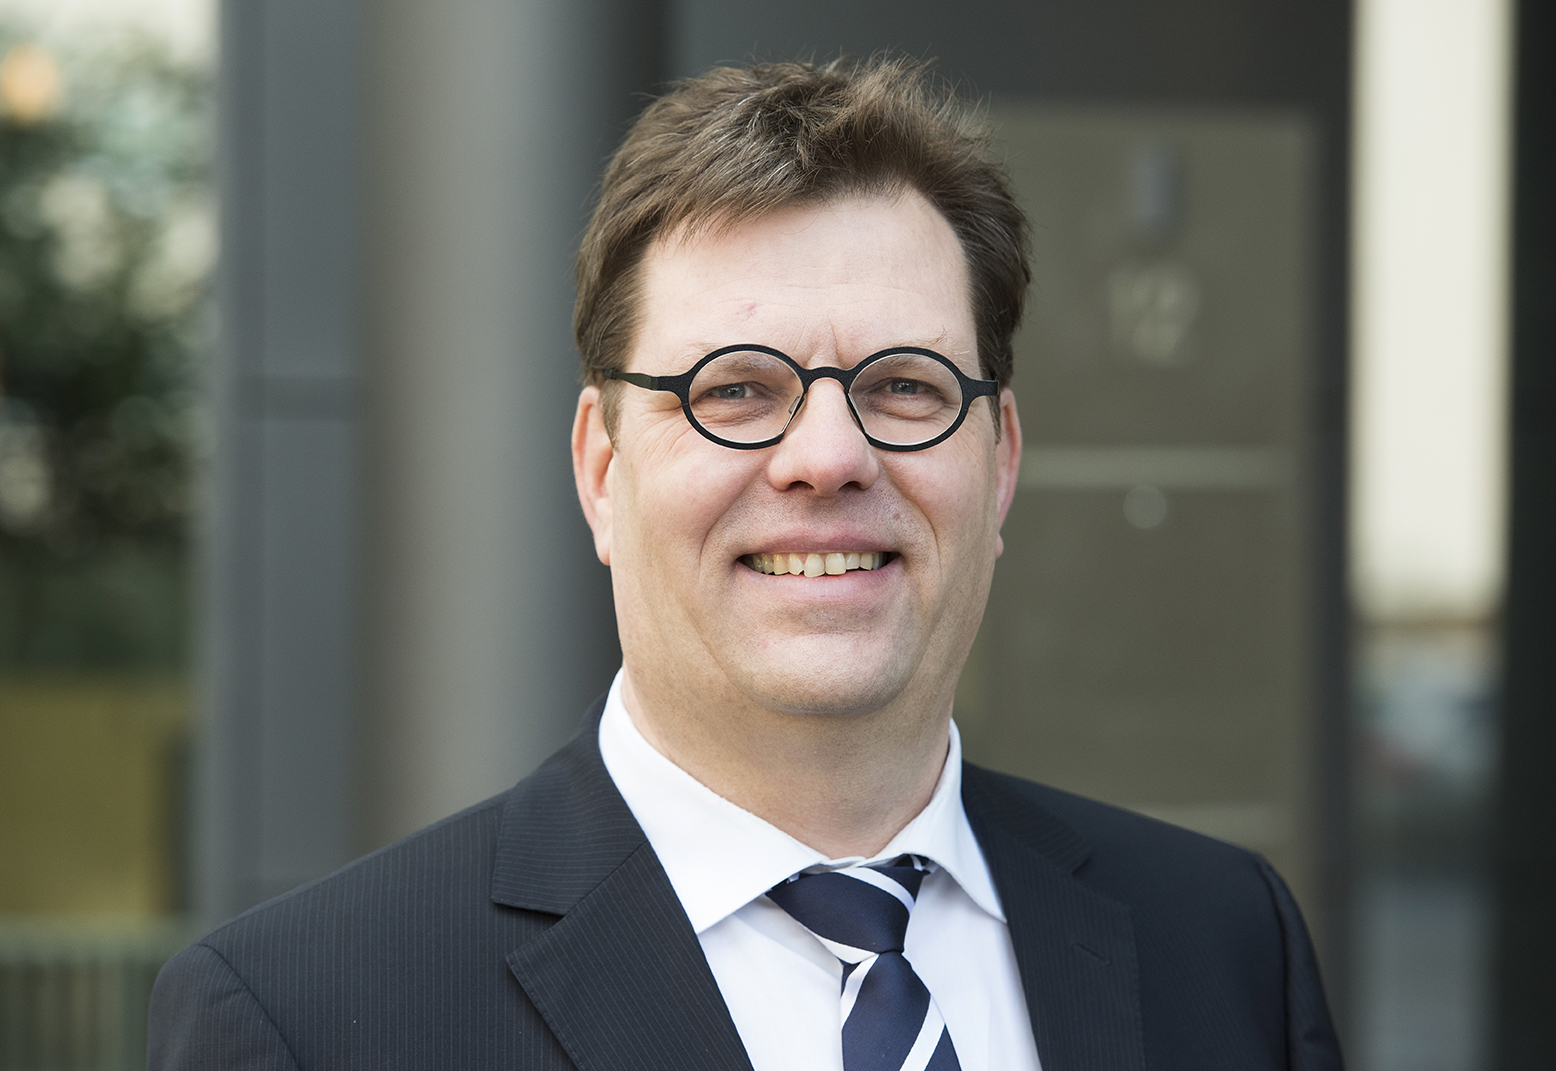 Jens-Christian Senger ist neuer Vorsitzender des BVEG-Vorstandes